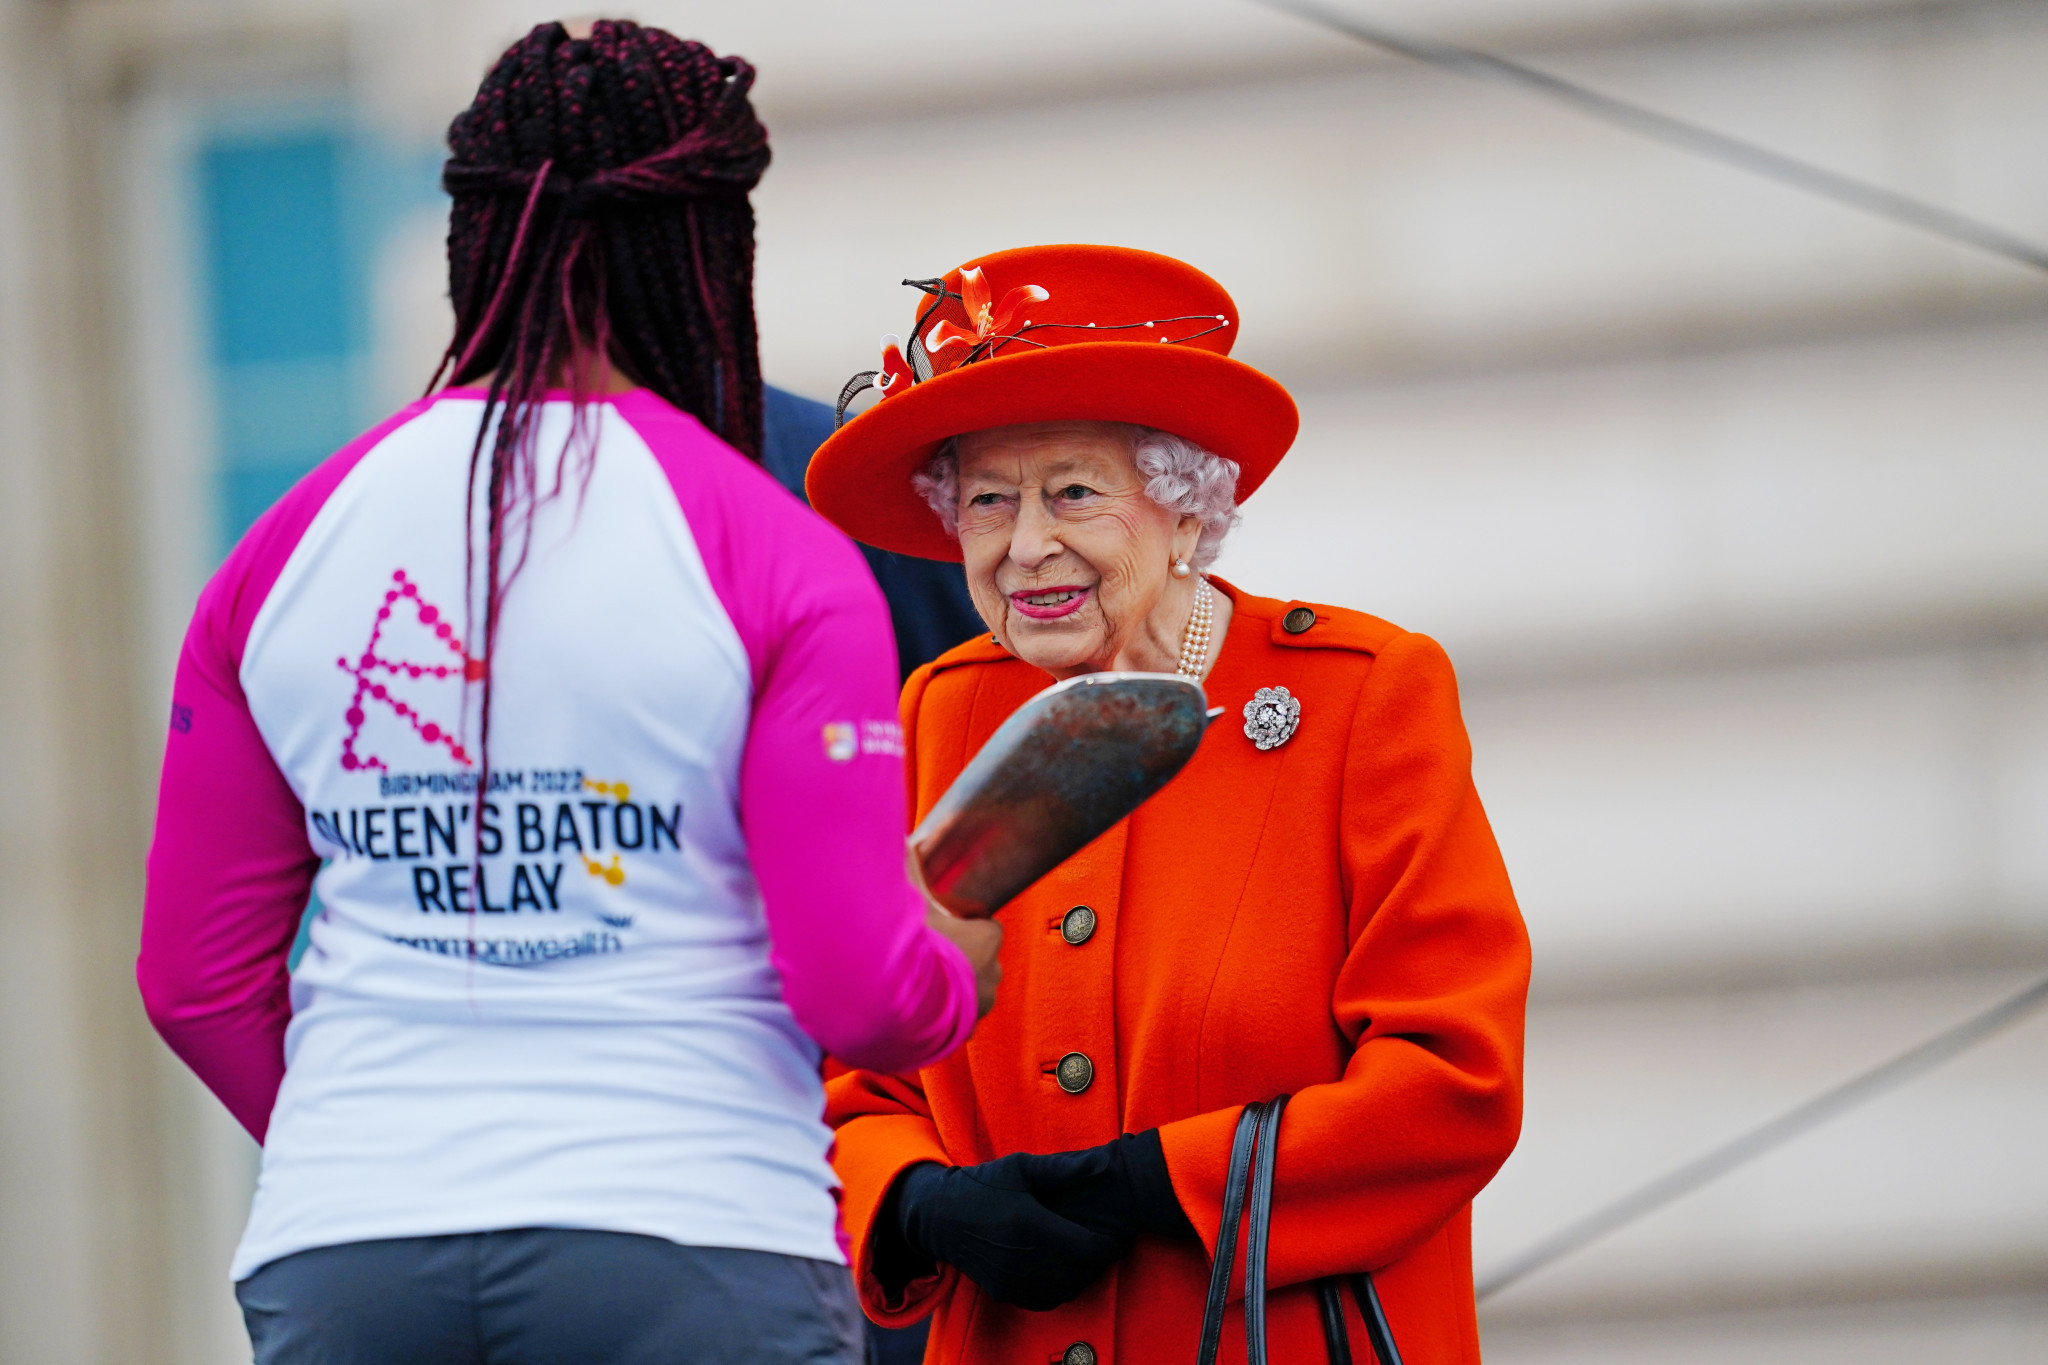 The Birmingham 2022 Baton is set to return to London next week to celebrate the Queen's Platinum Jubilee ©Birmingham 2022